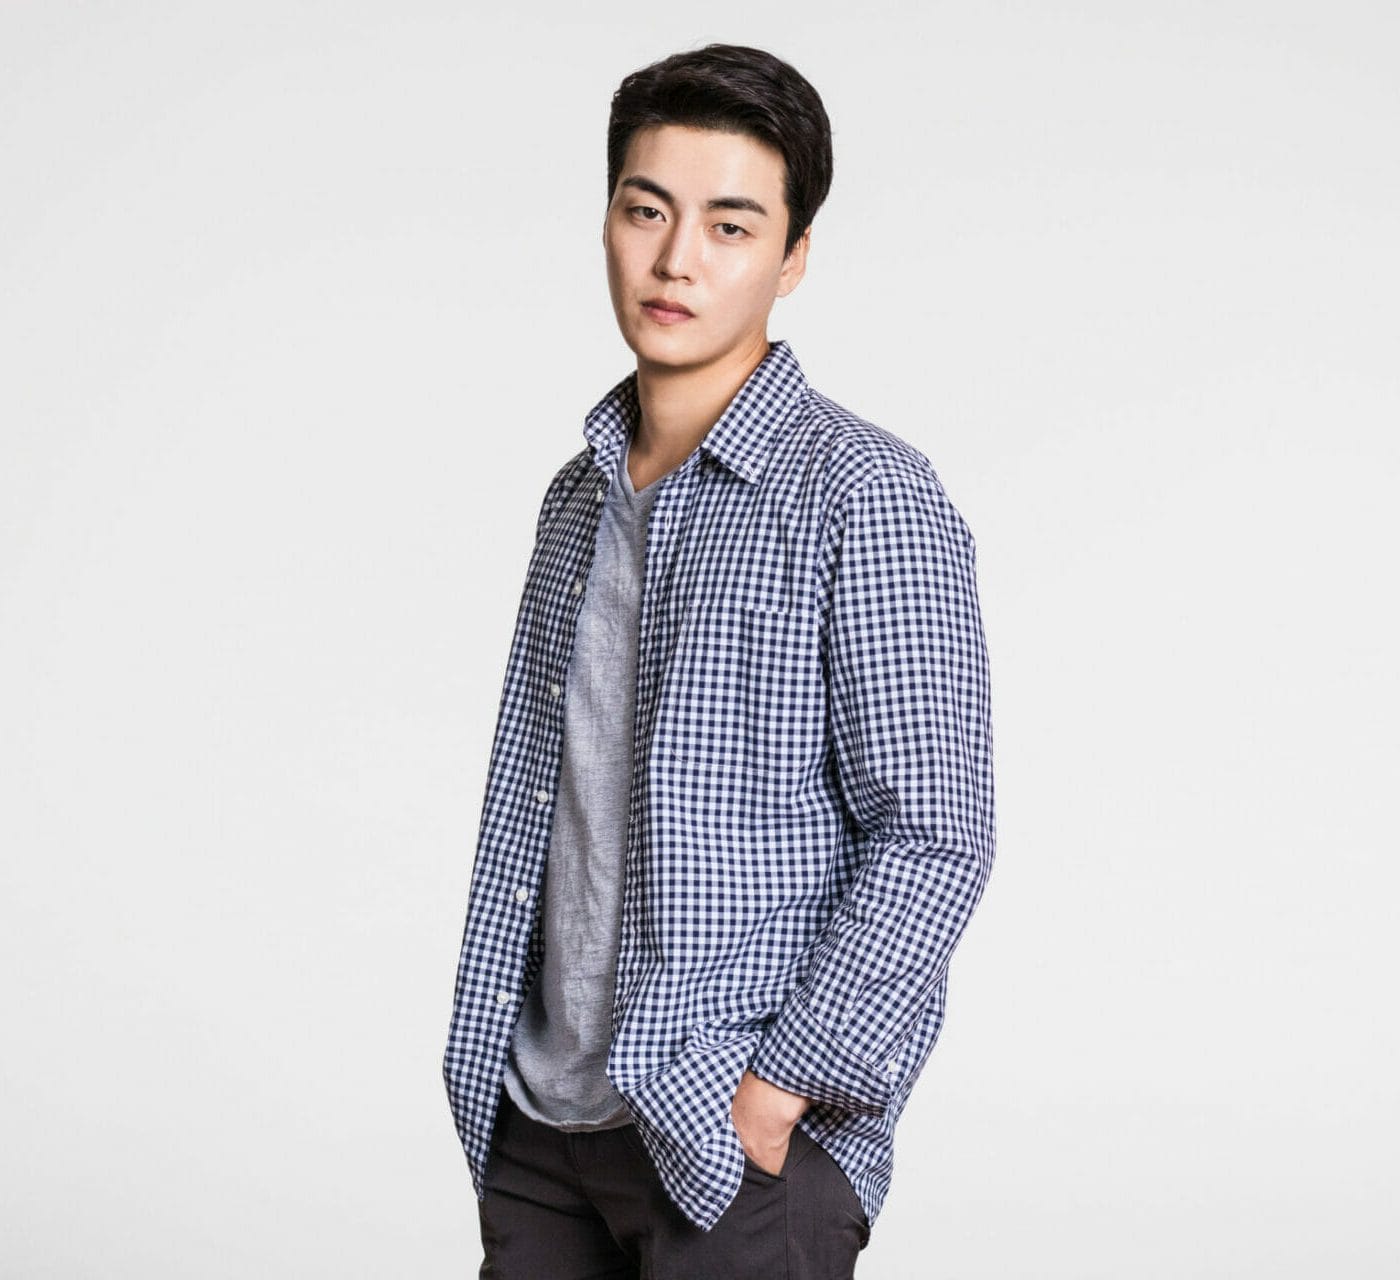 LV Emblem T shirt  Trendy shirt designs, Korean fashion men